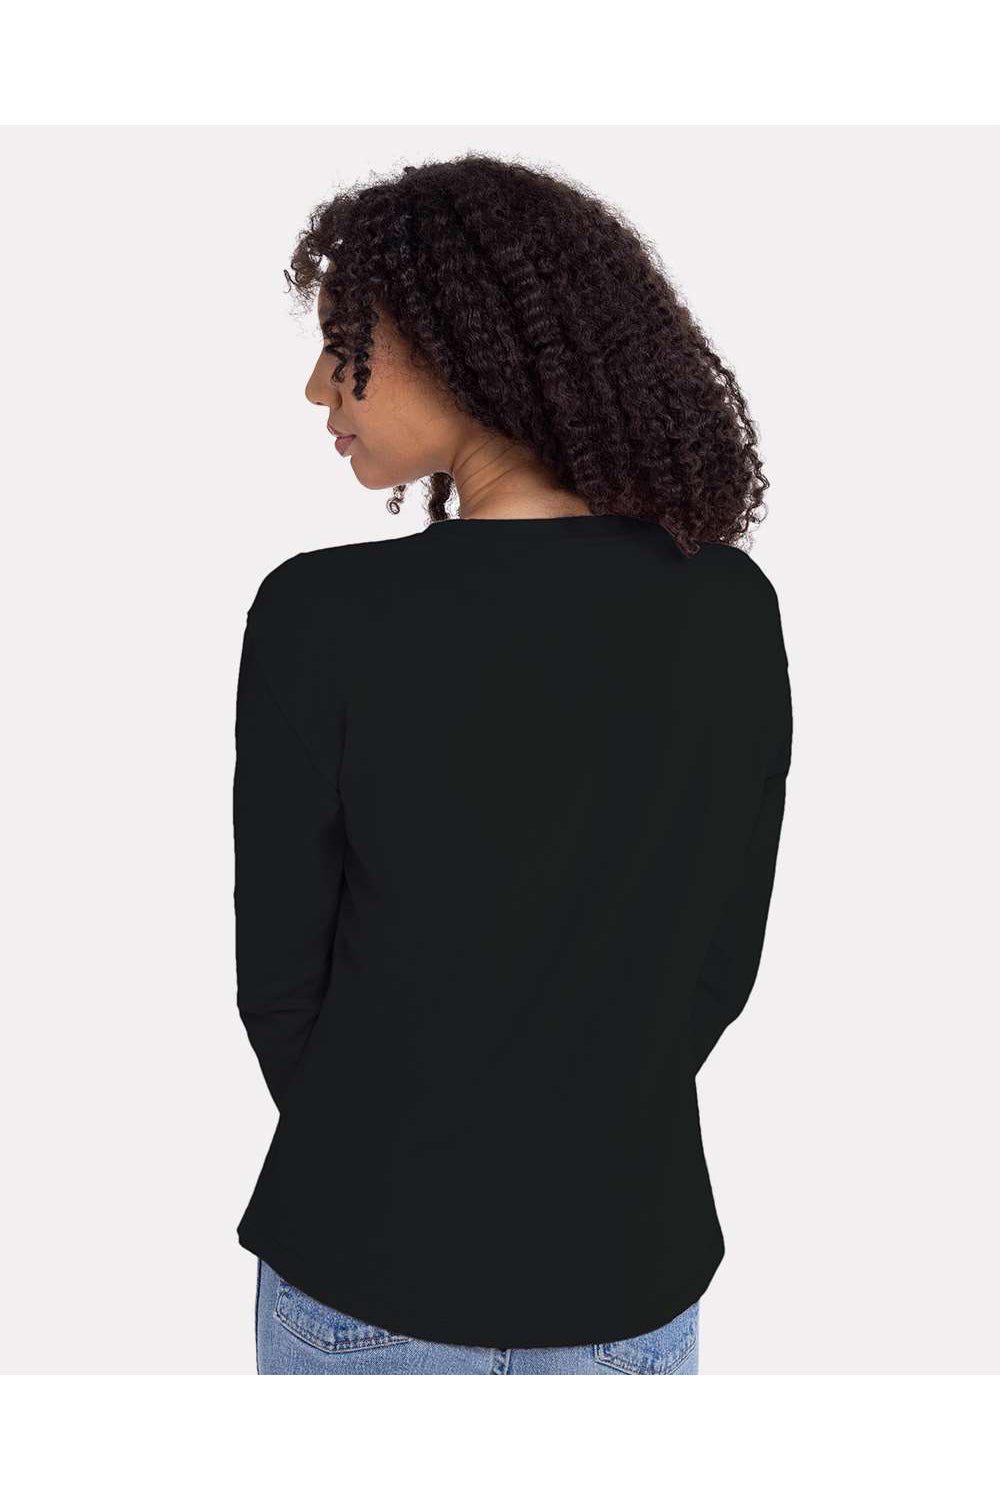 Next Level 3911 Womens Relaxed Long Sleeve Crewneck T-Shirt Black Model Back